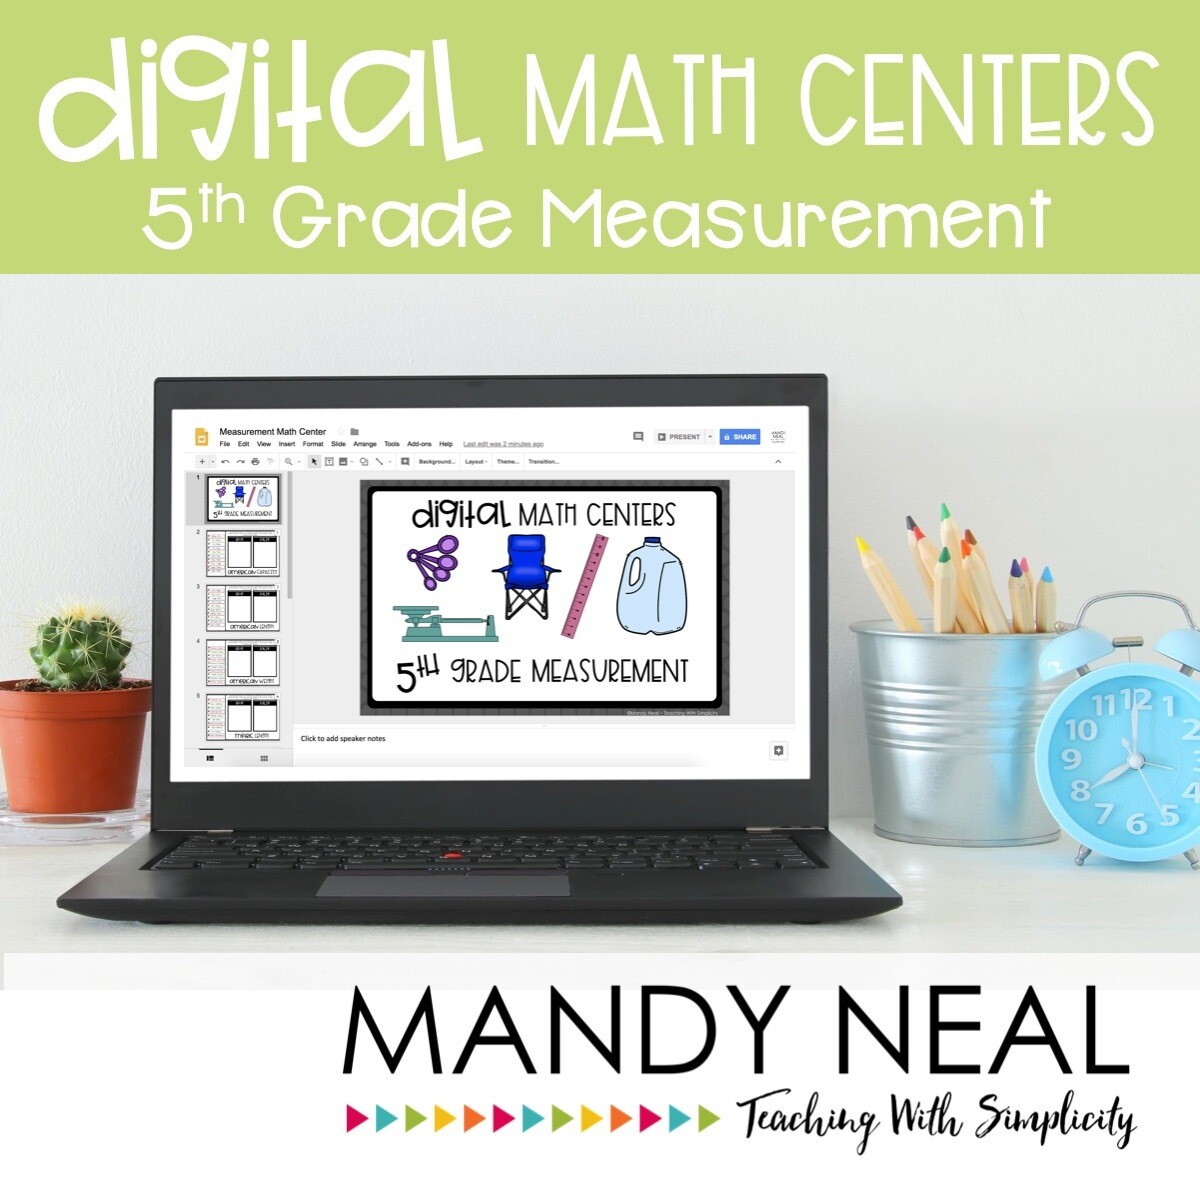 Fifth Grade Digital Math Centers Measurement